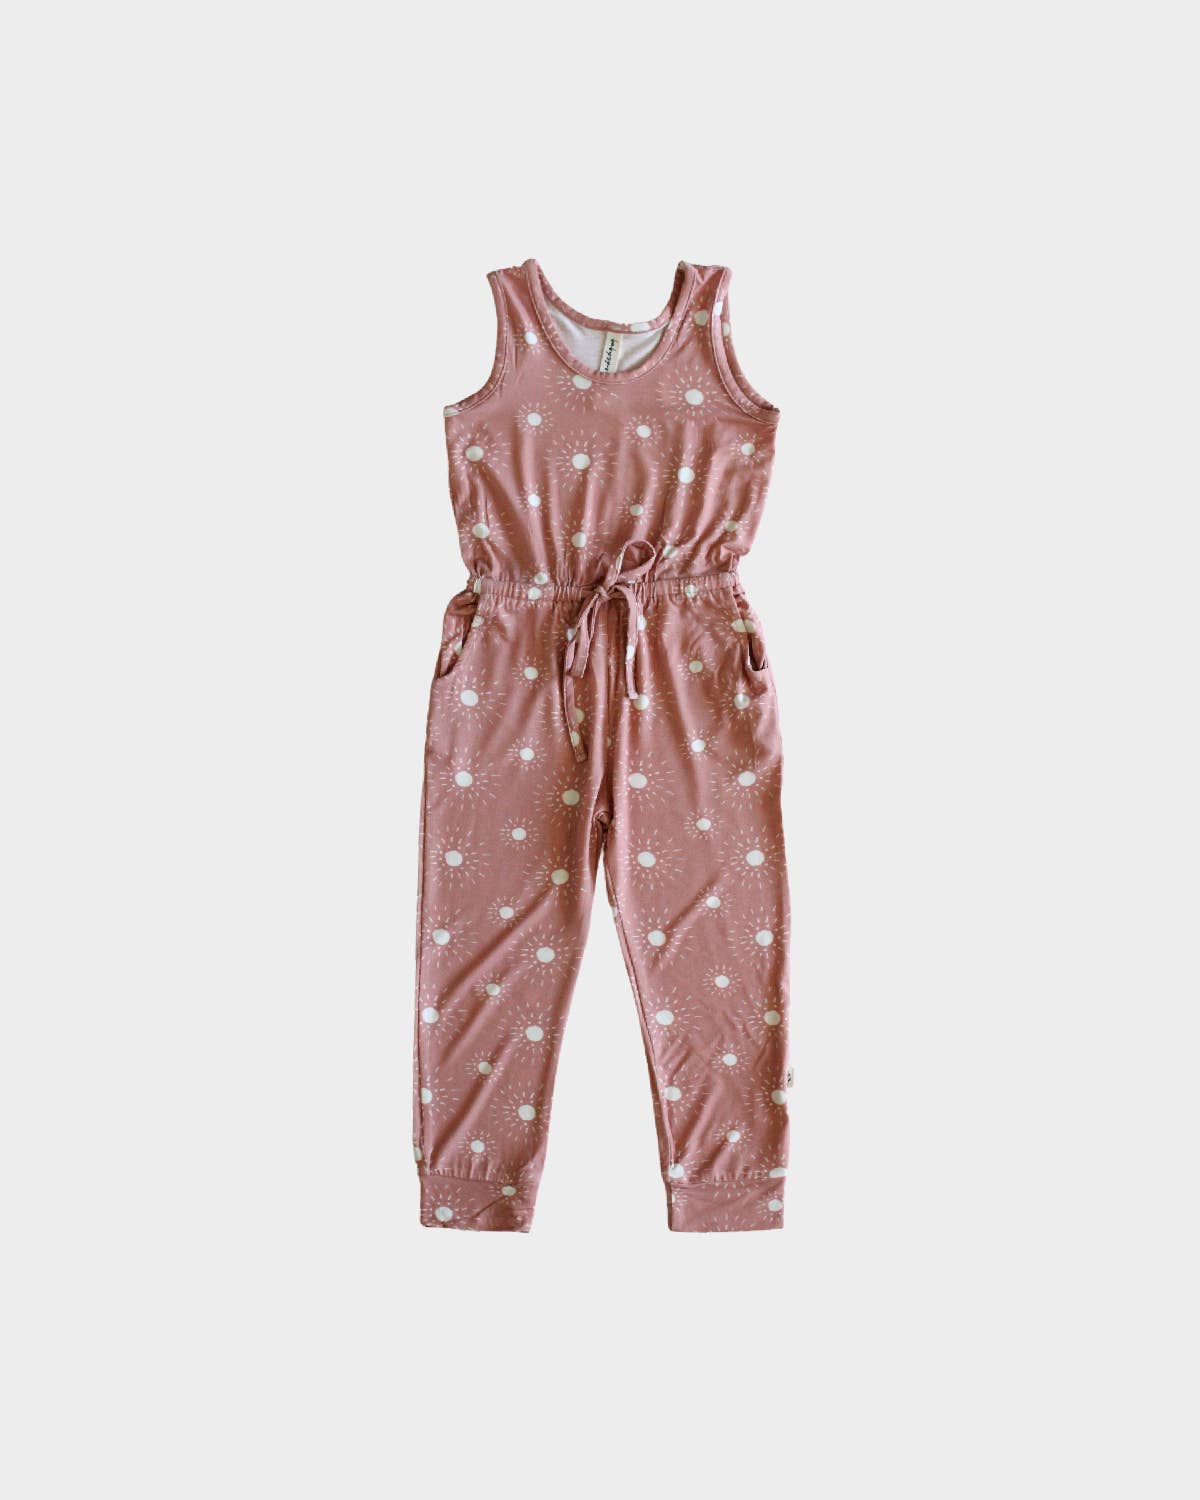 babysprouts clothing company - S23 D1: Toddler Girl's Tank Jumper in Rose Sunburst - kennethodaniel